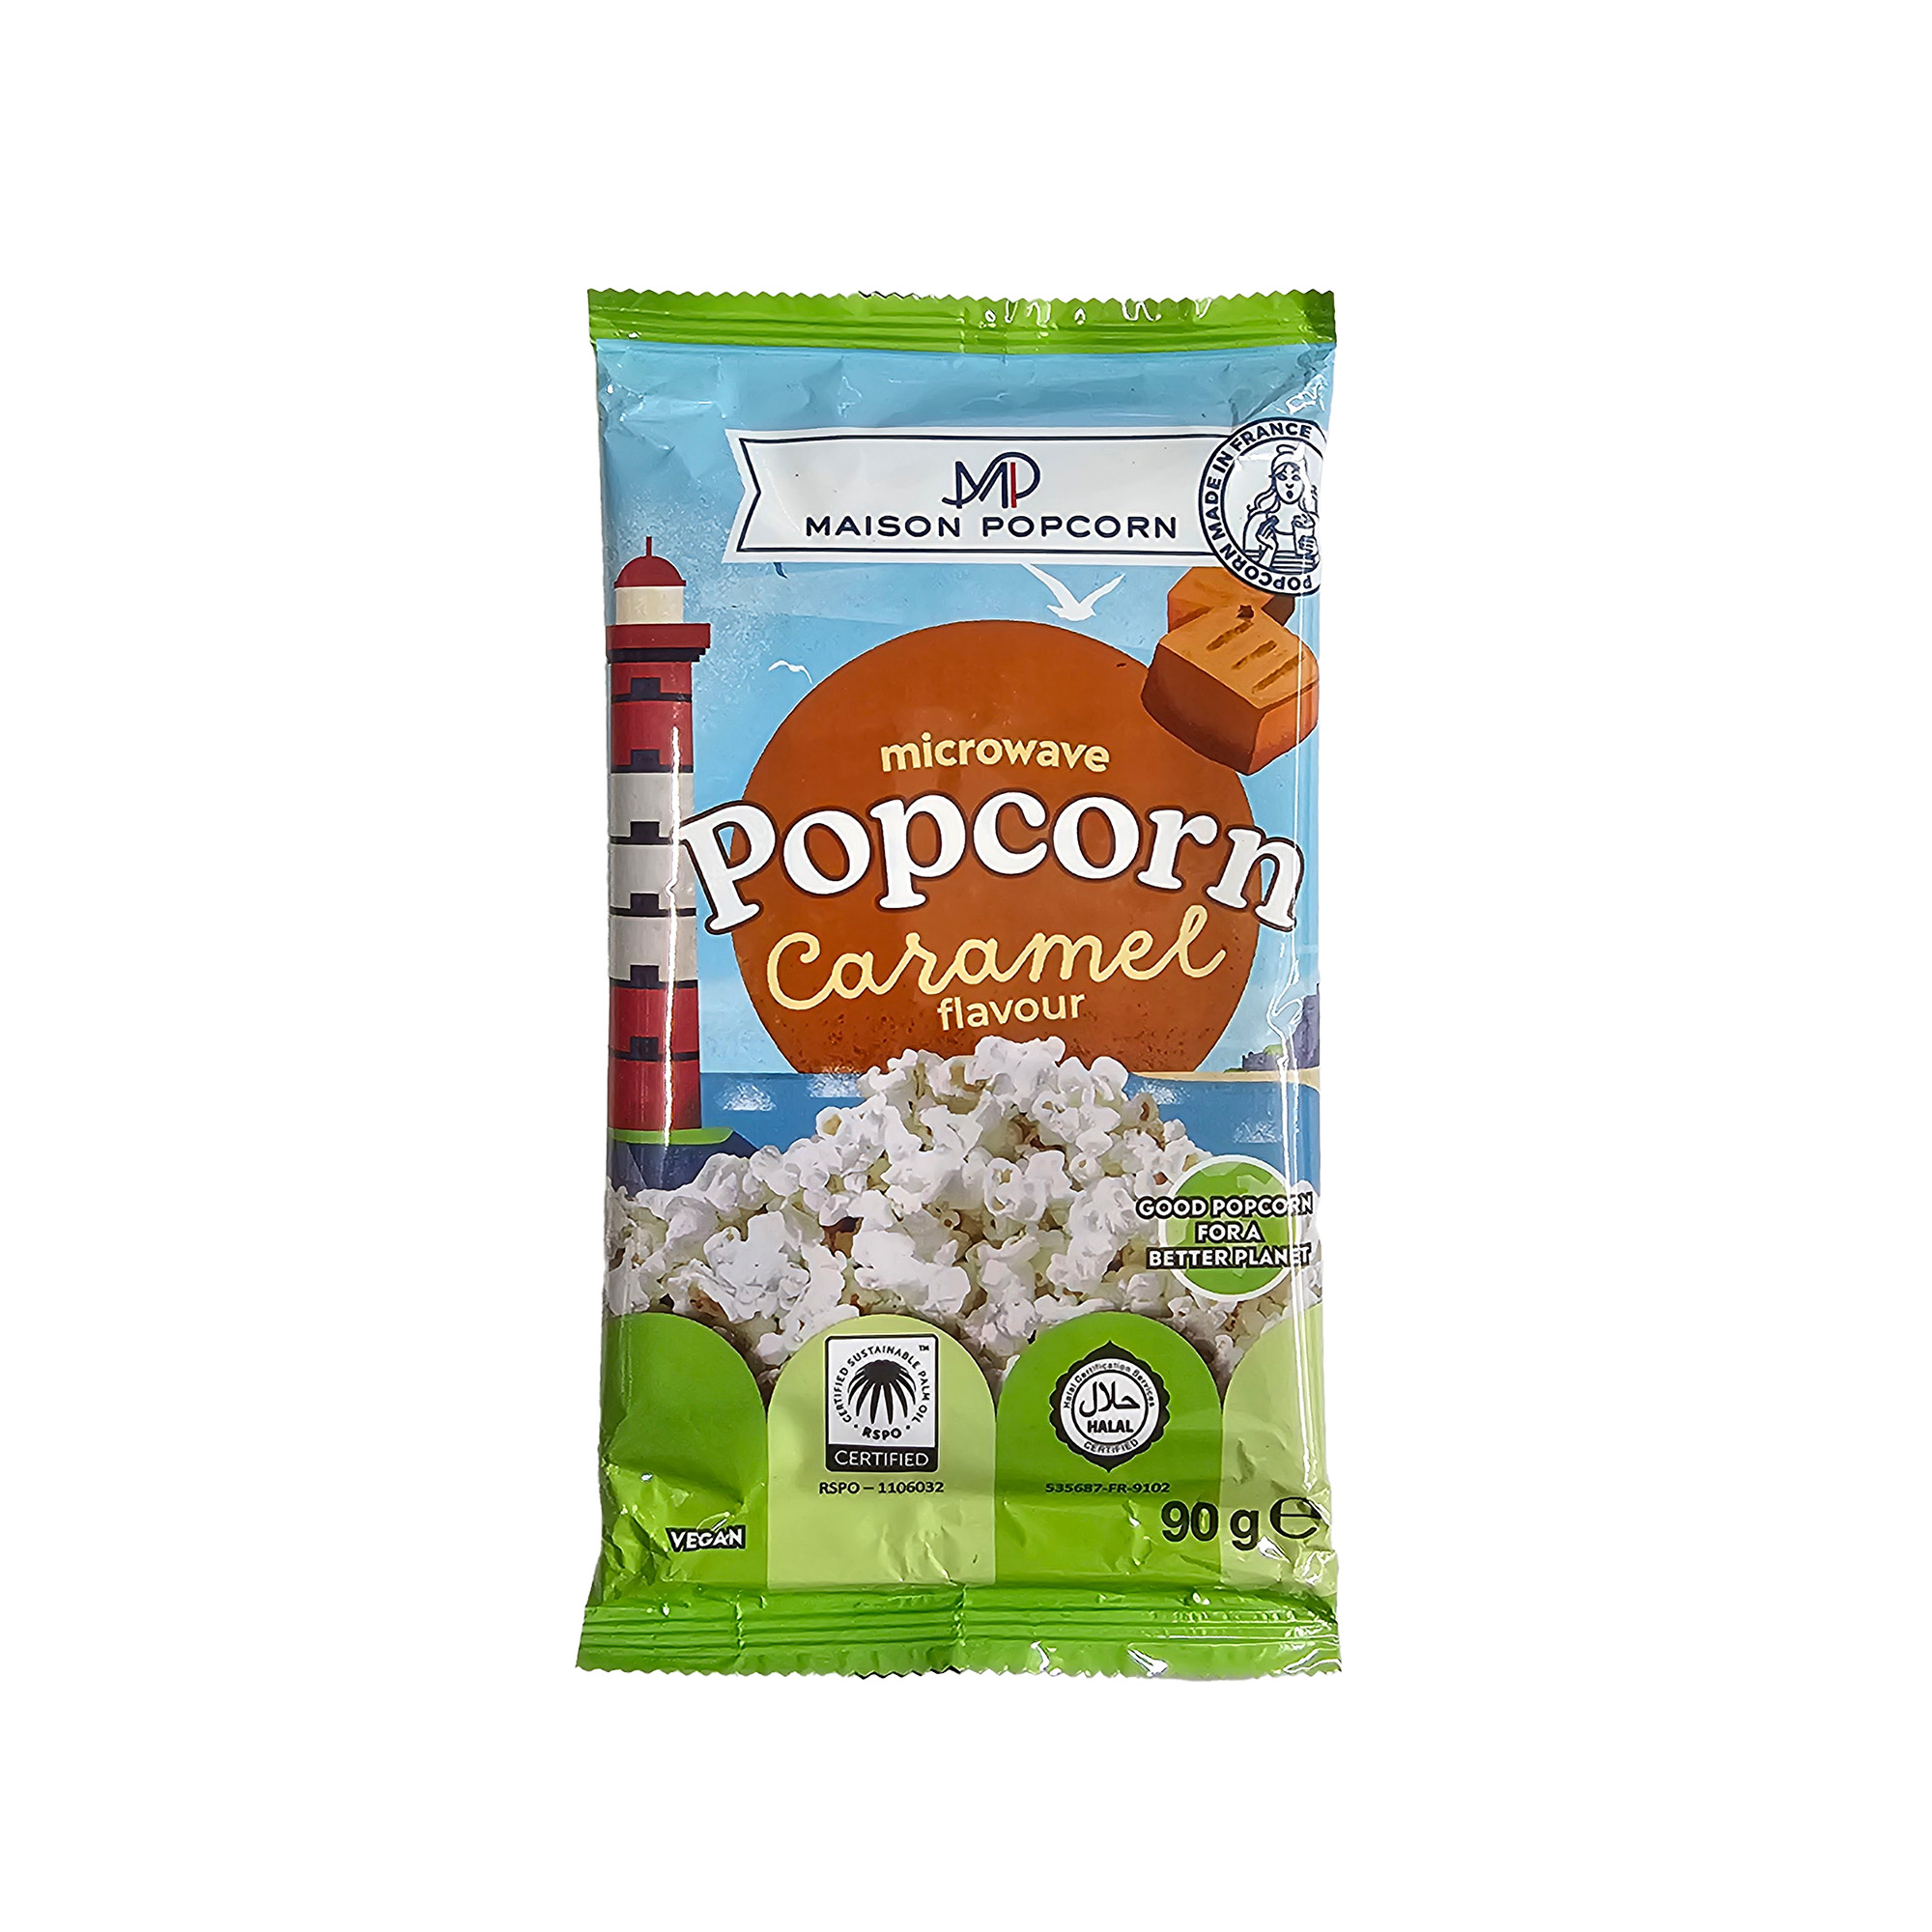 Microwave Popcorn Caramel Flavour (Maison Popcorn)